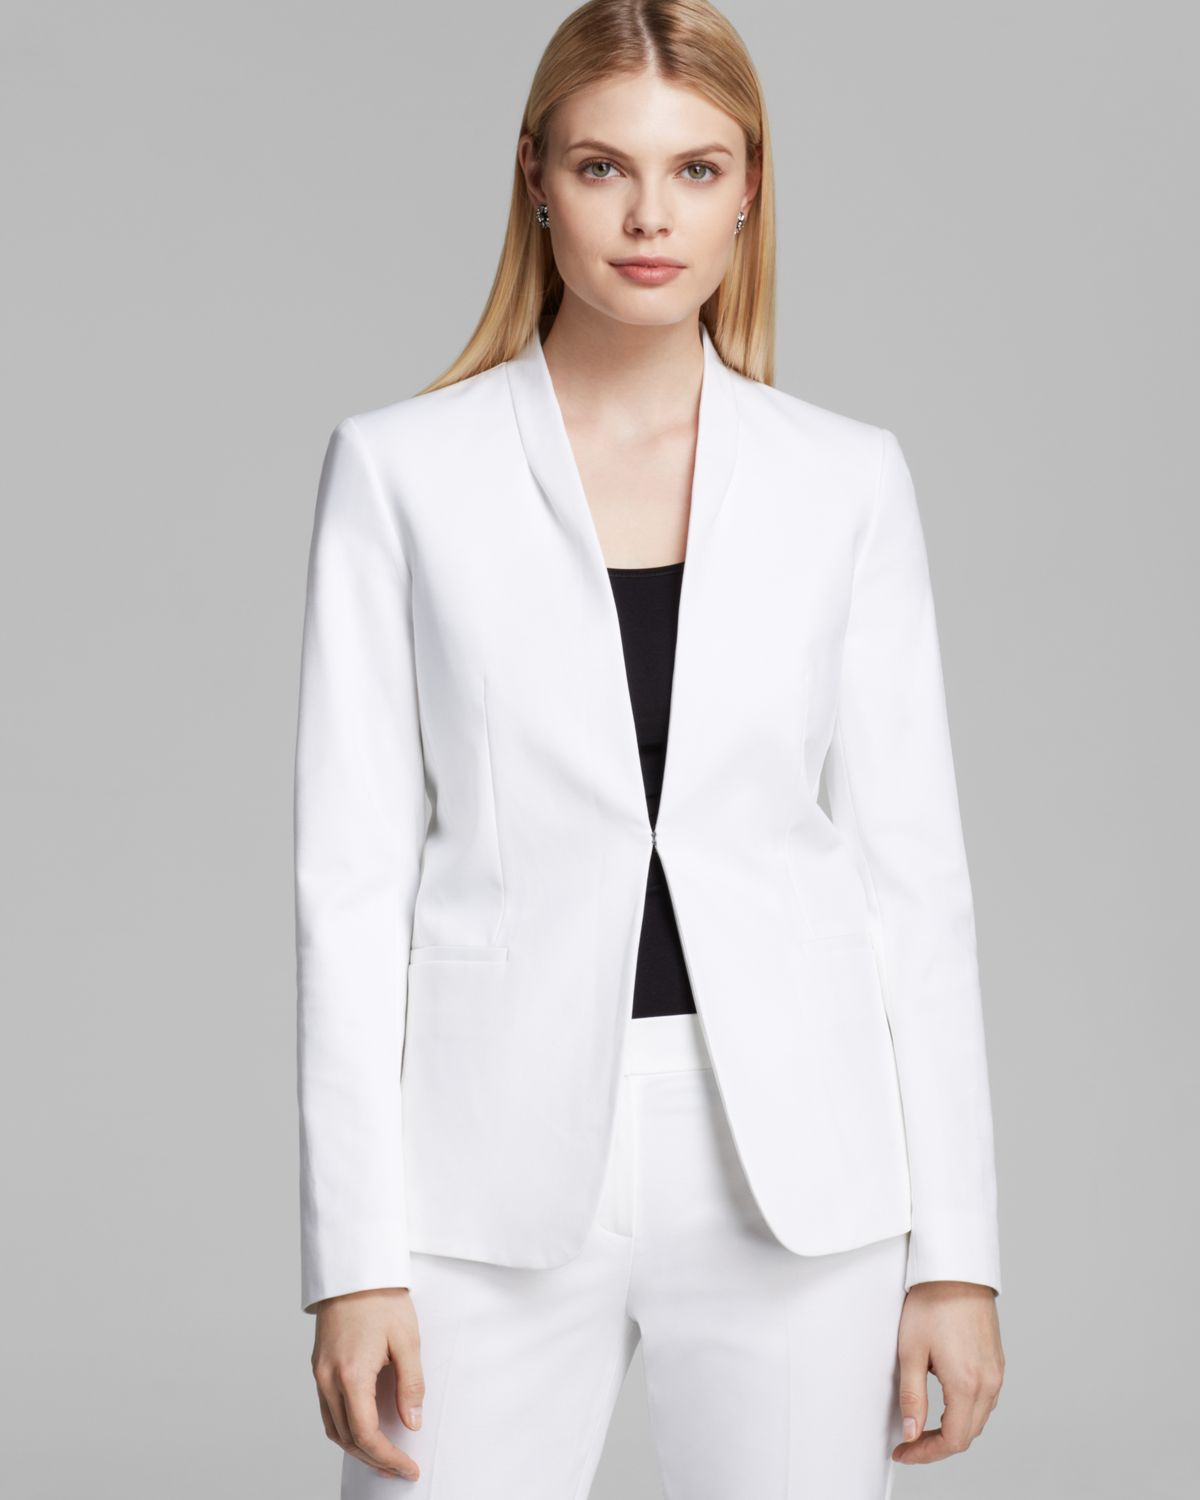 Lyst - T Tahari Lisbon Collarless Jacket in White